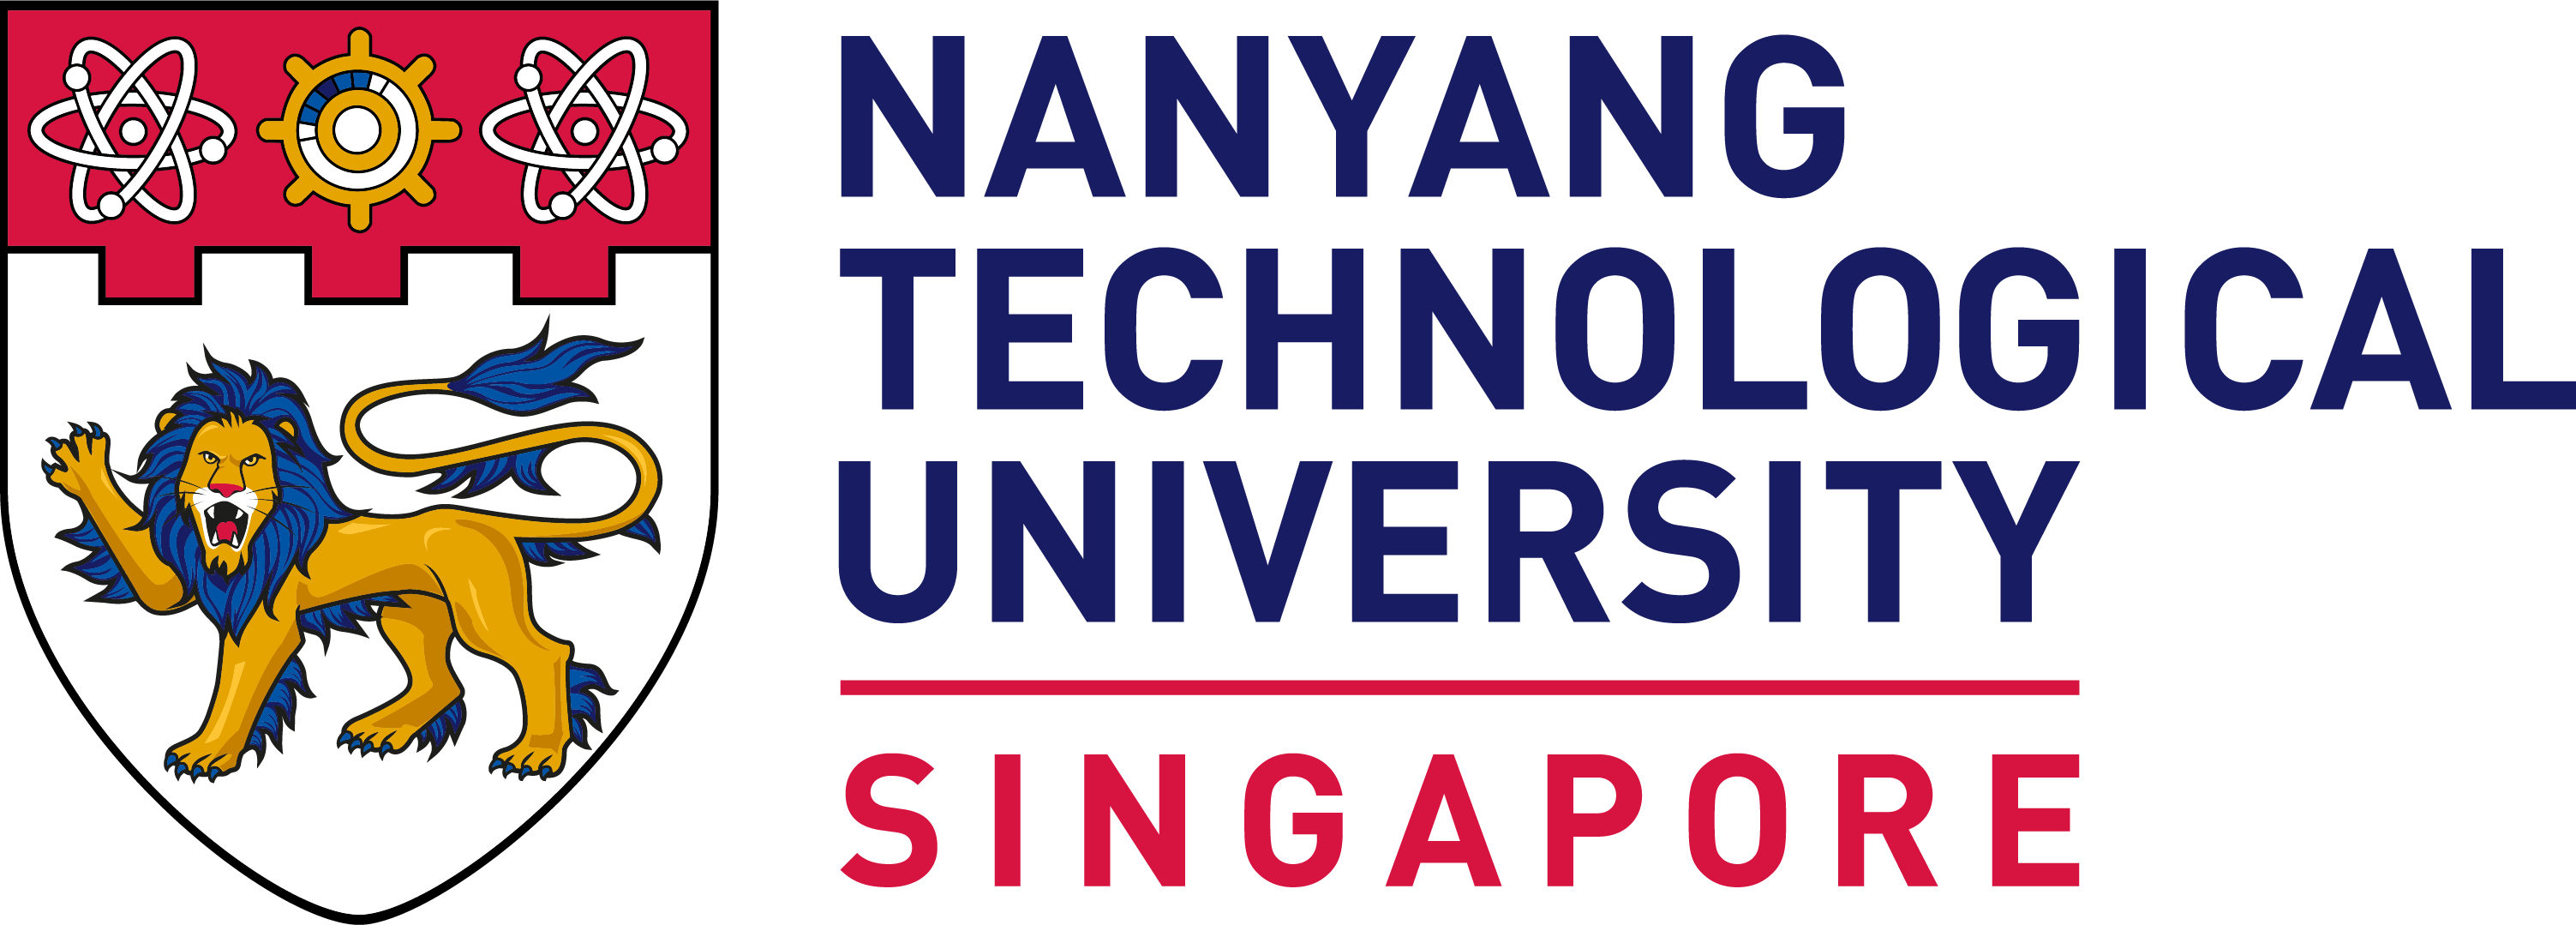 Nanyang Technological University company logo